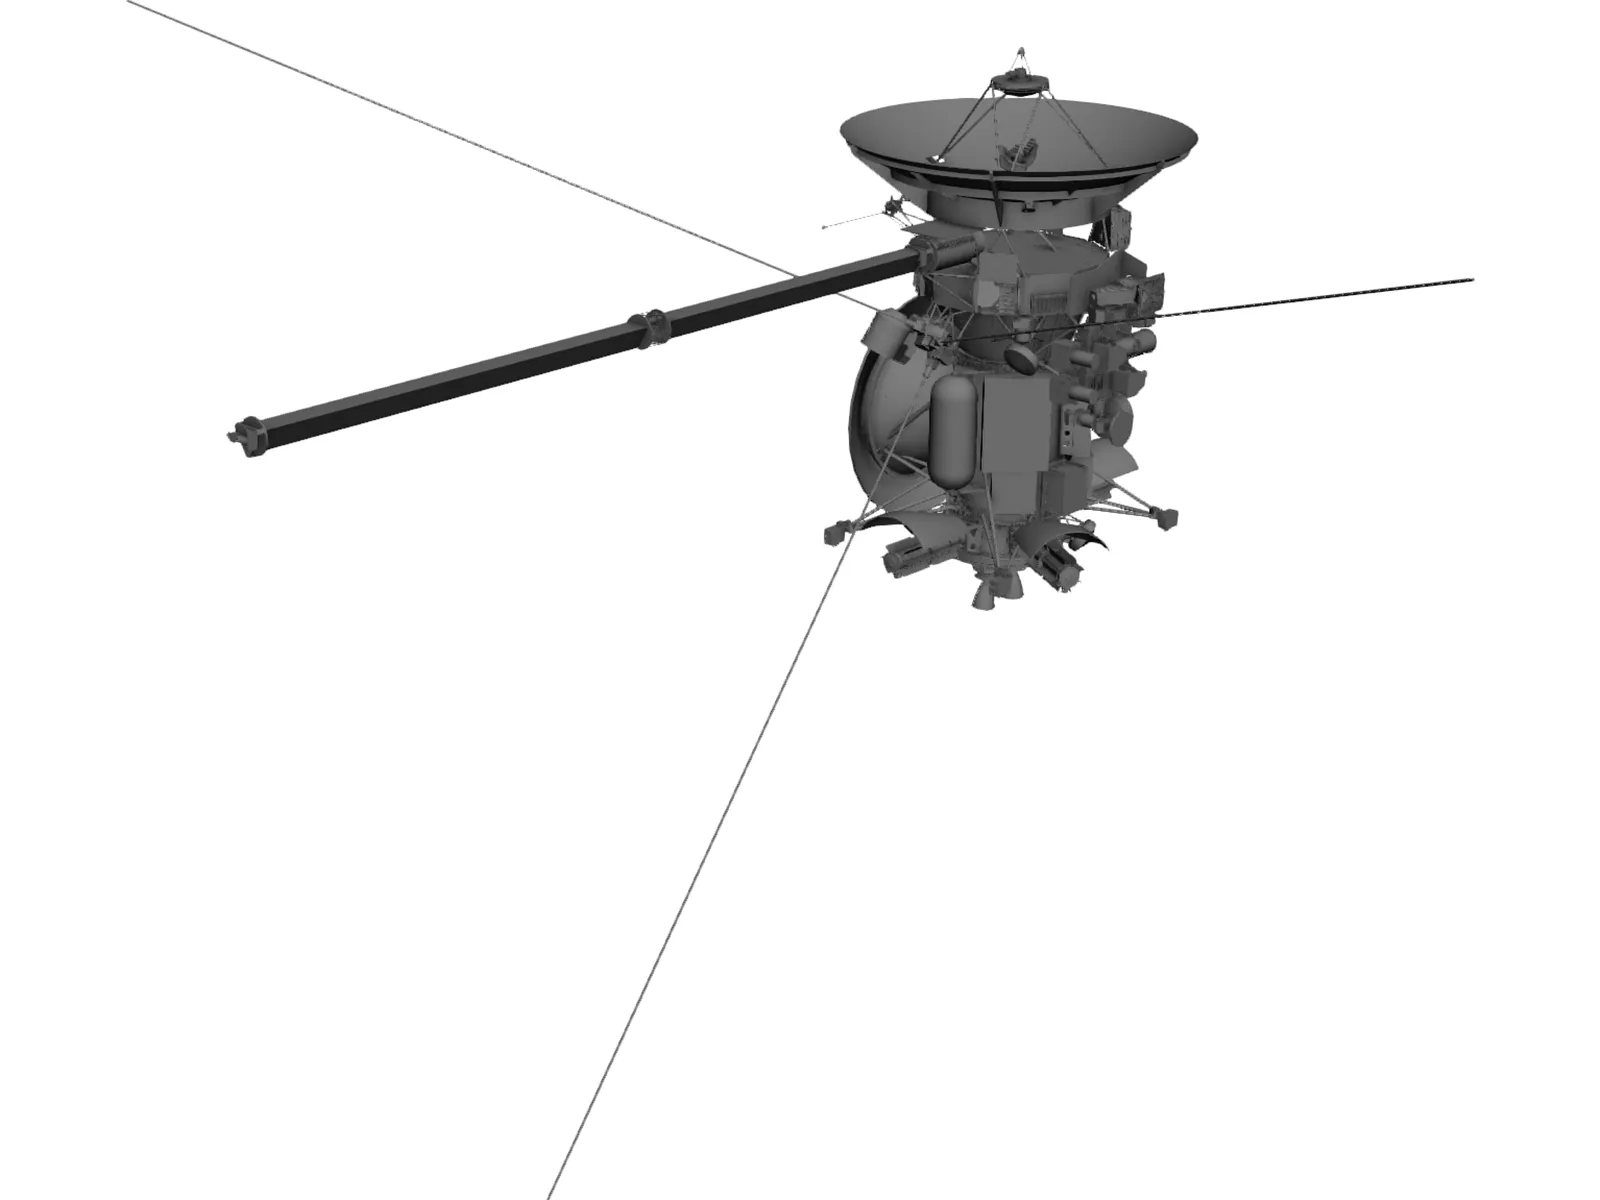 Cassini Orbiter NASA Probe 3D Model